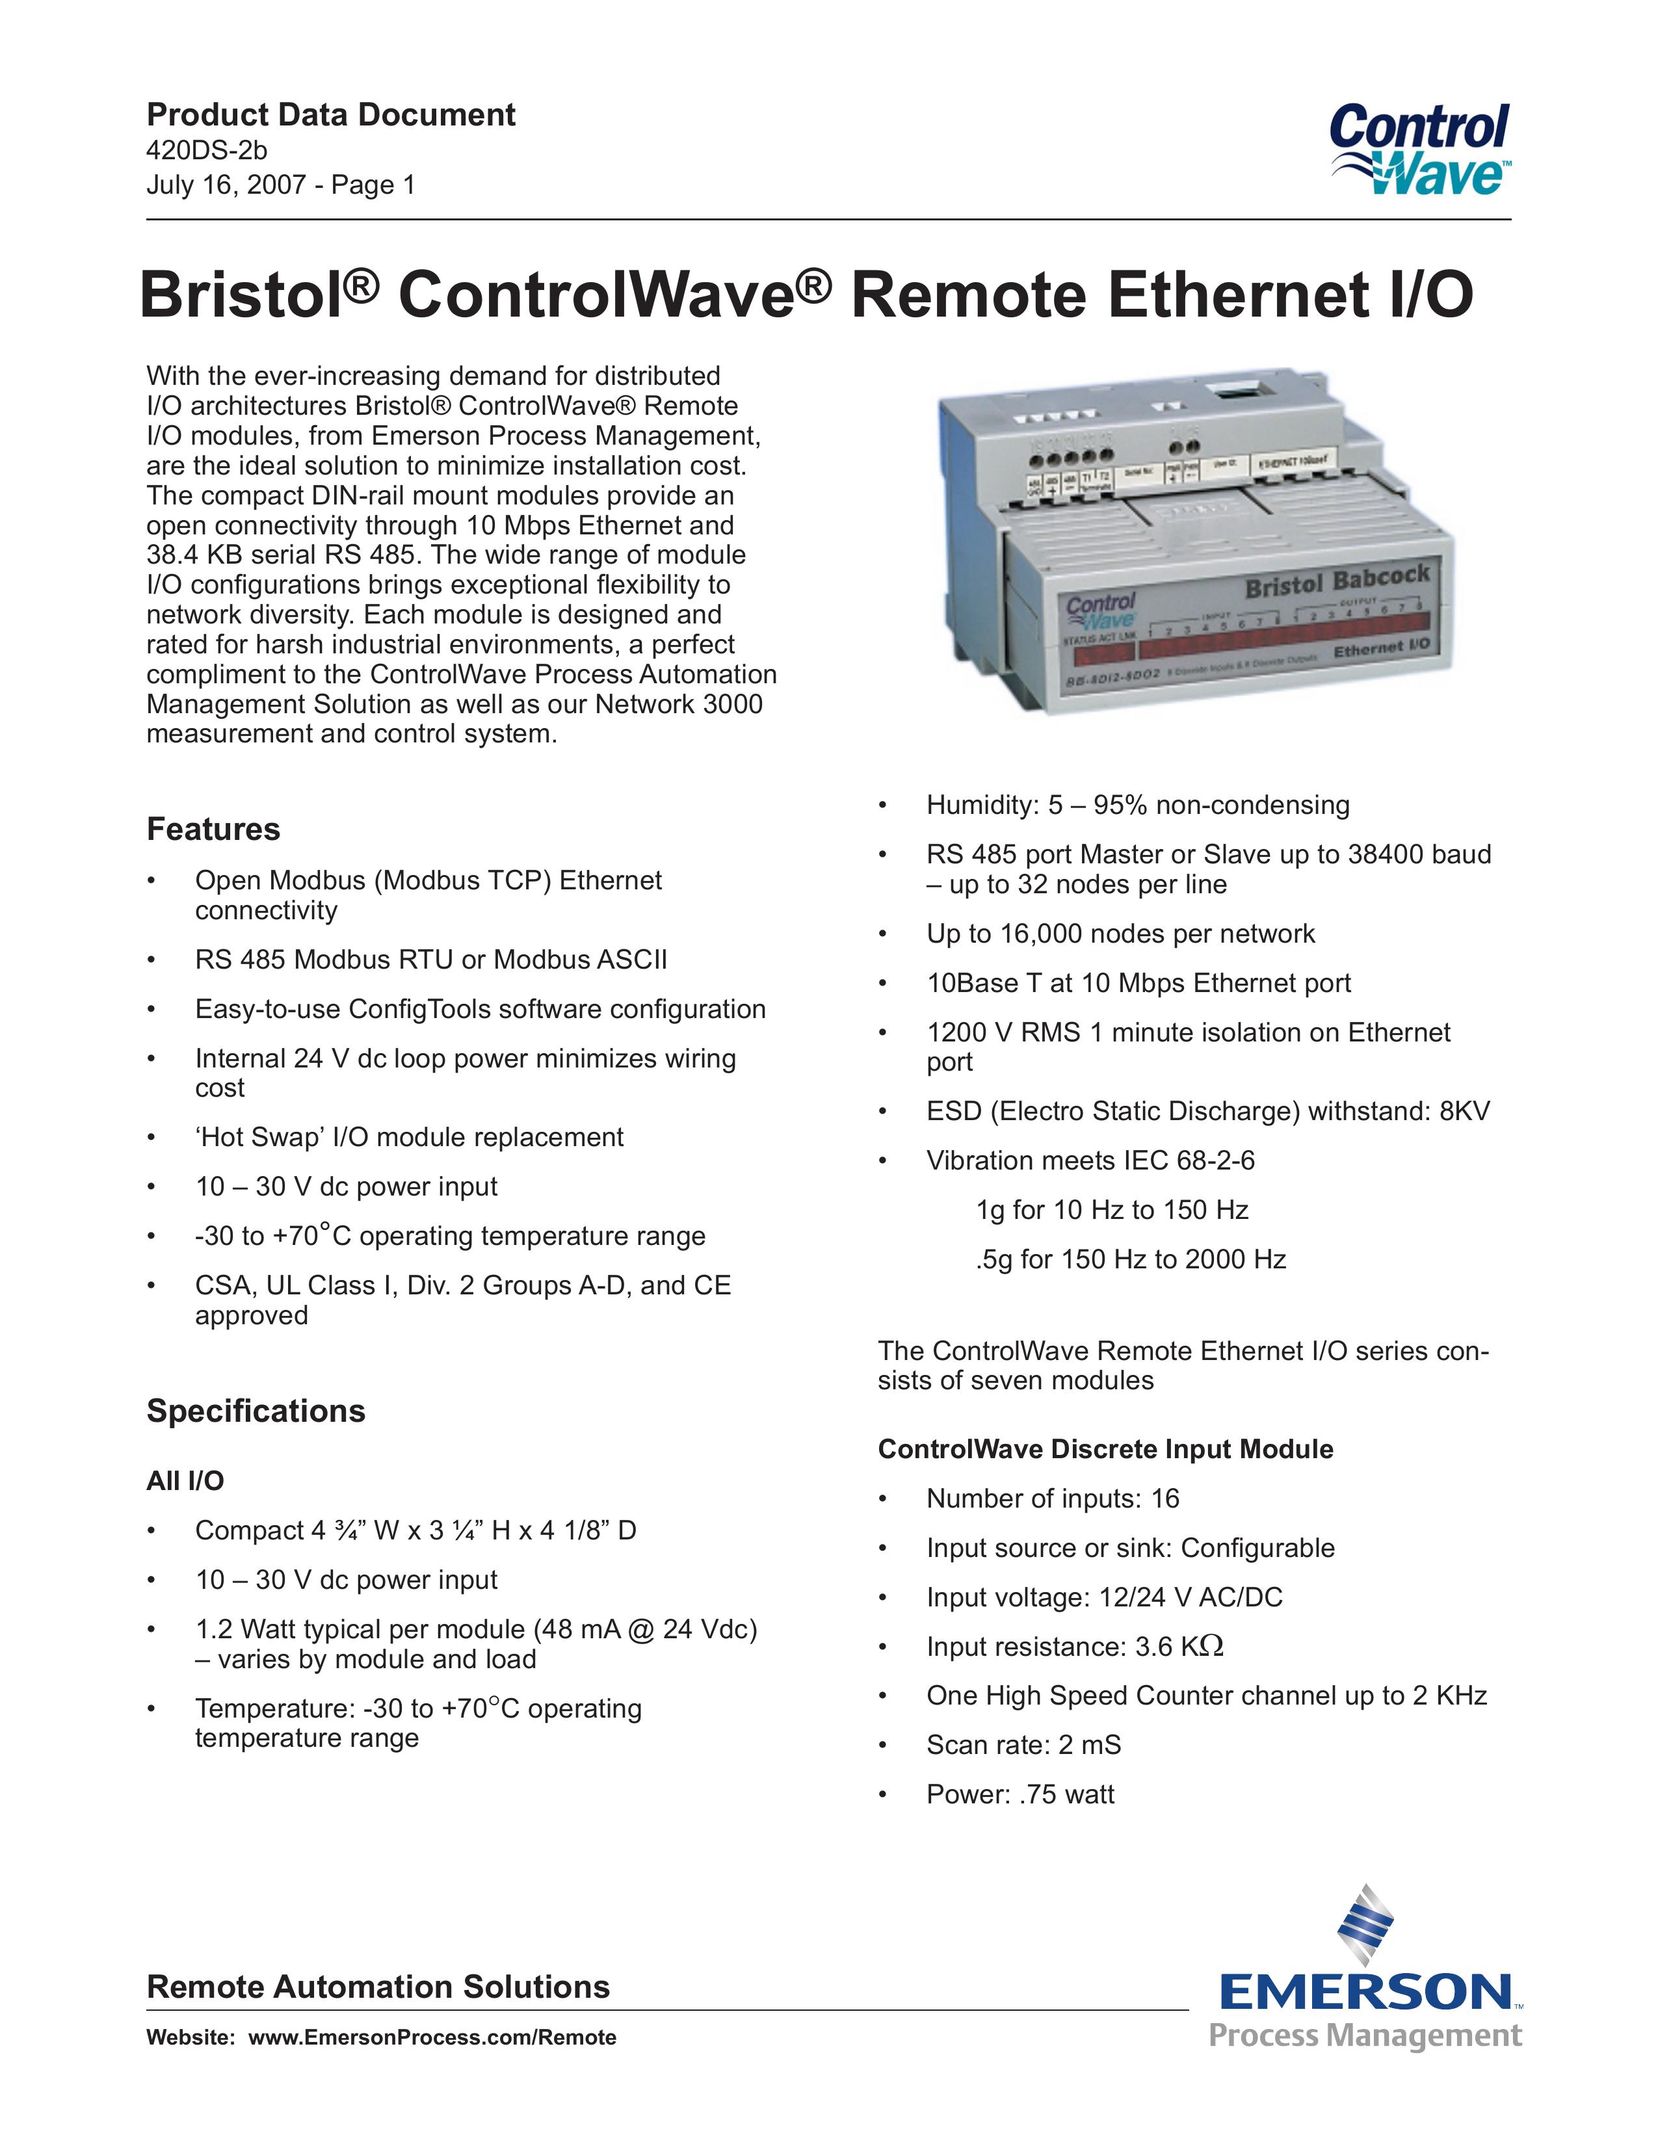 Emerson Process Management ControlWave Remote Ethernet I/O Network Card User Manual